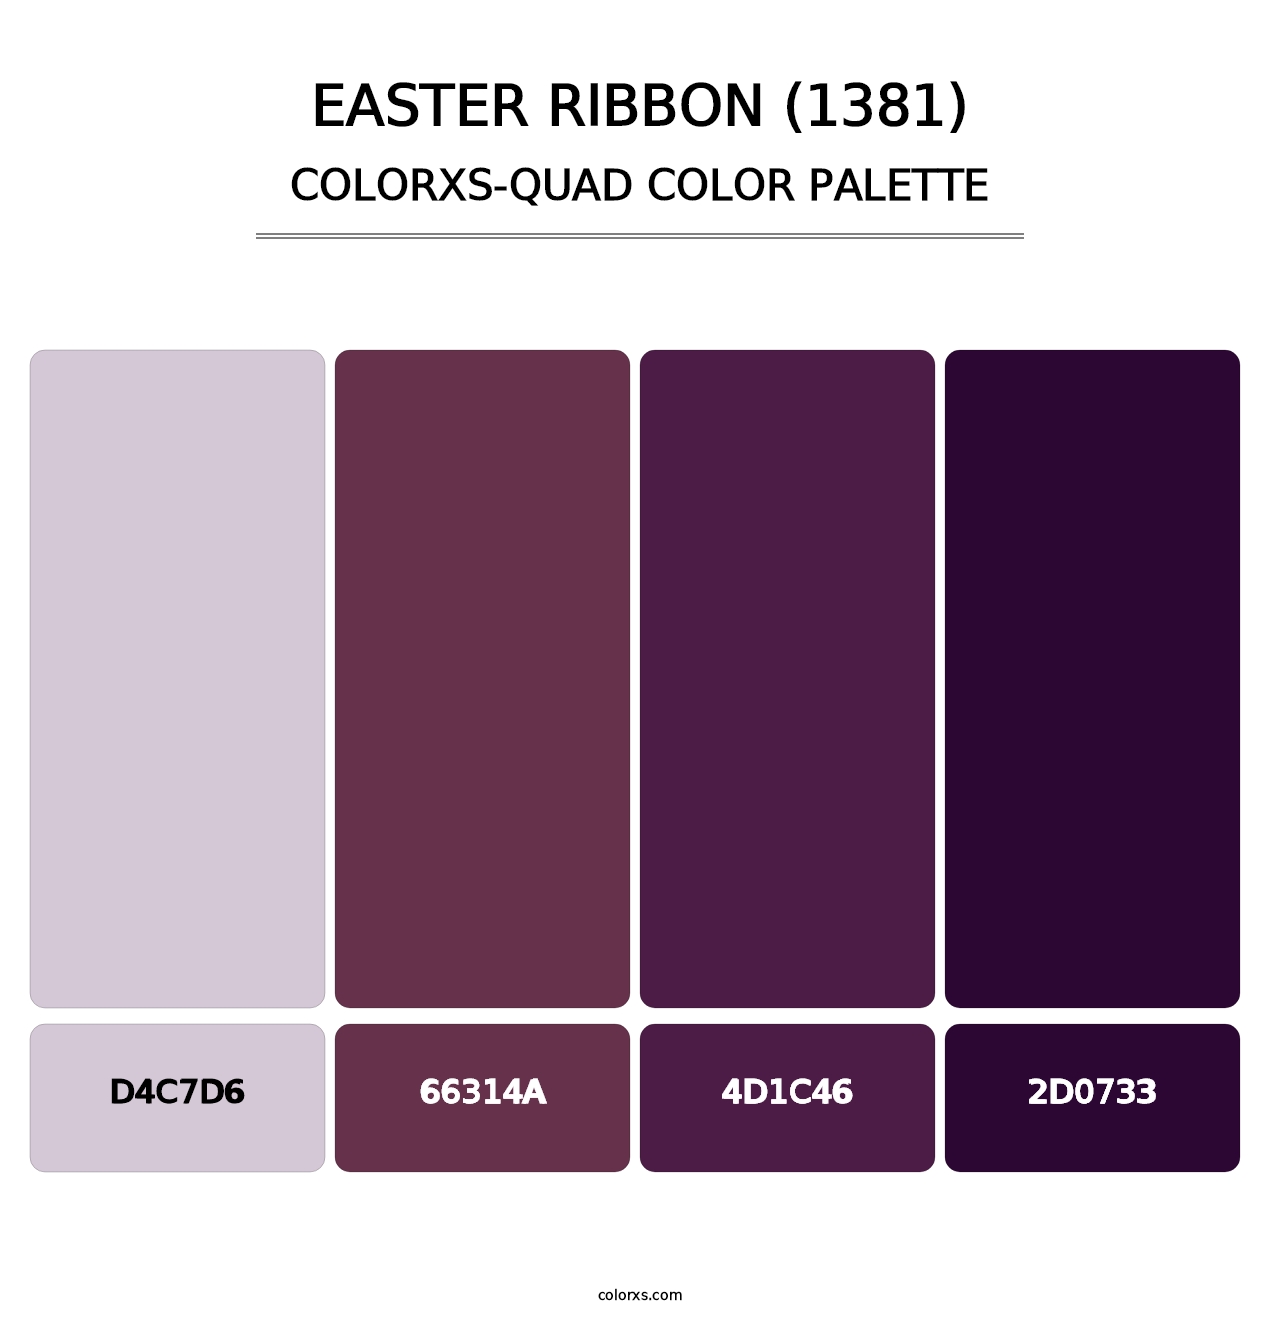 Easter Ribbon (1381) - Colorxs Quad Palette